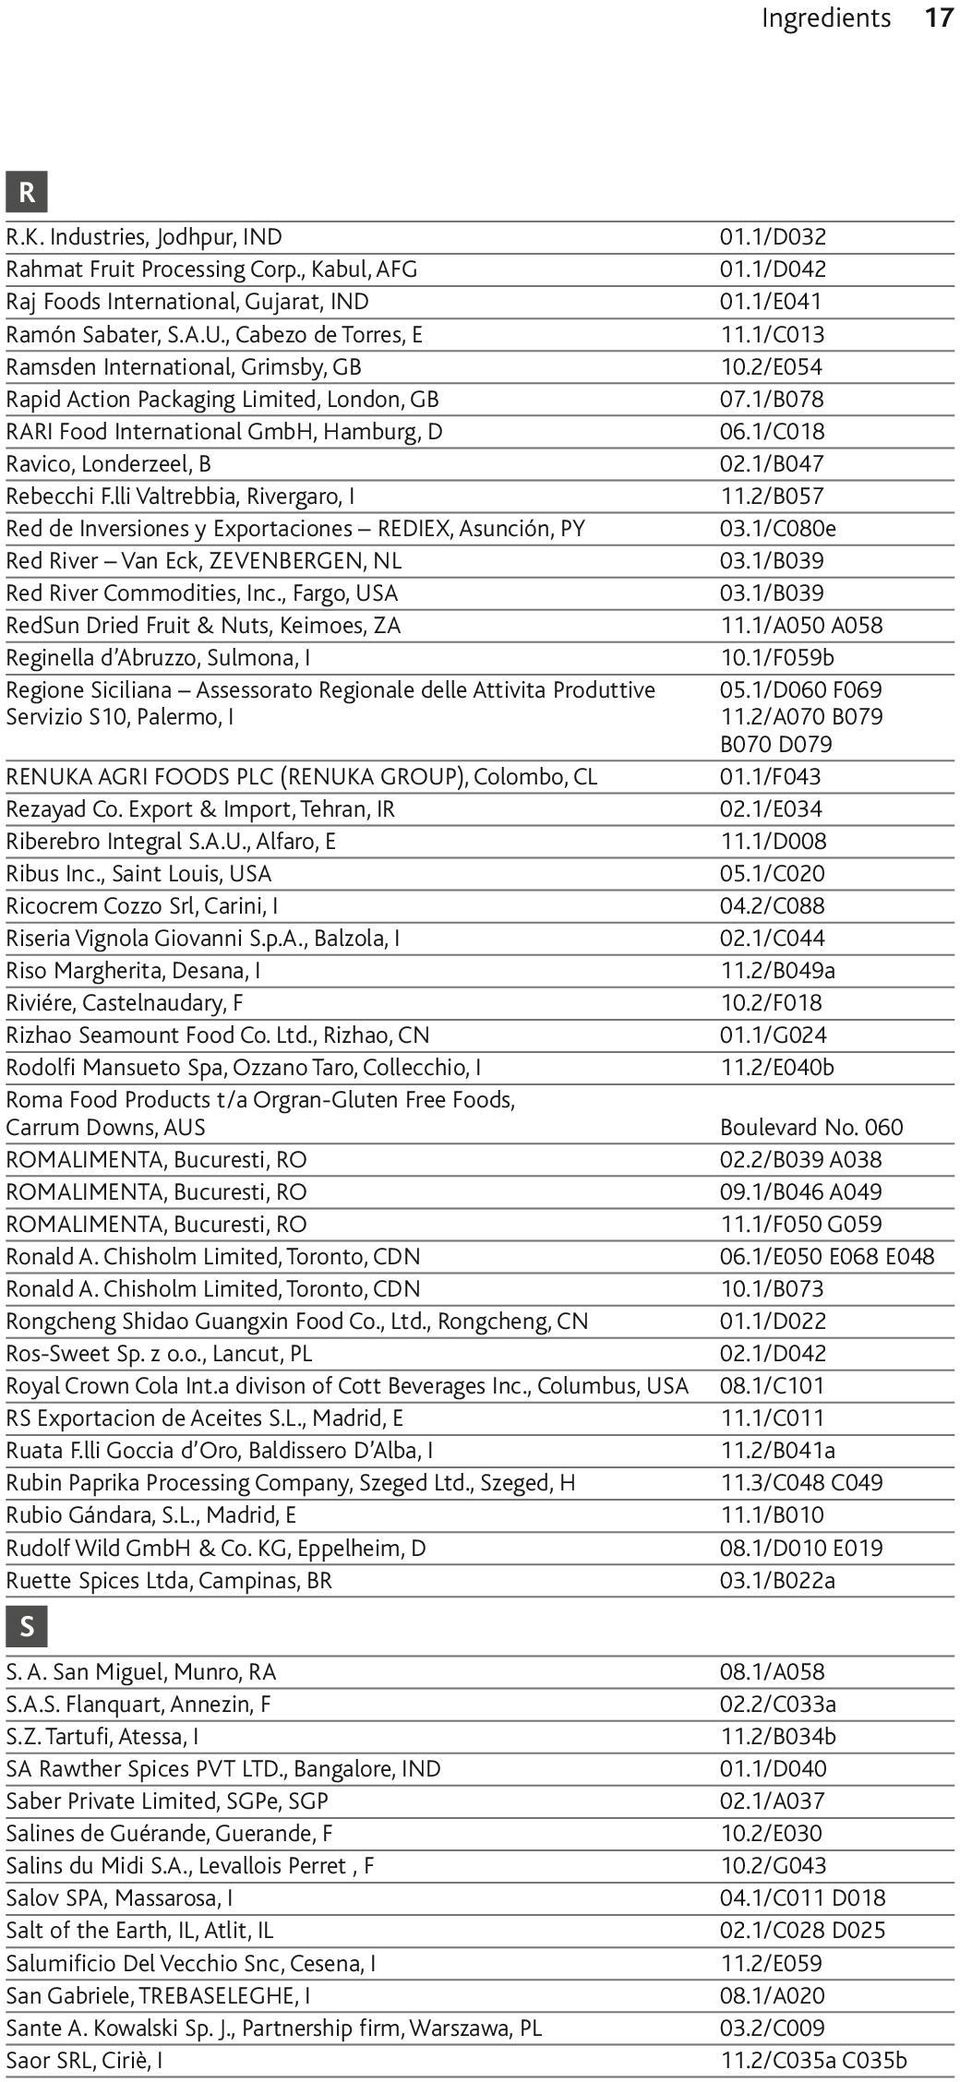 1/C018 Ravico, Londerzeel, B 02.1/B047 Rebecchi F.lli Valtrebbia, Rivergaro, I 11.2/B057 Red de Inversiones y Exportaciones REDIEX, Asunción, PY 03.1/C080e Red River Van Eck, ZEVENBERGEN, NL 03.